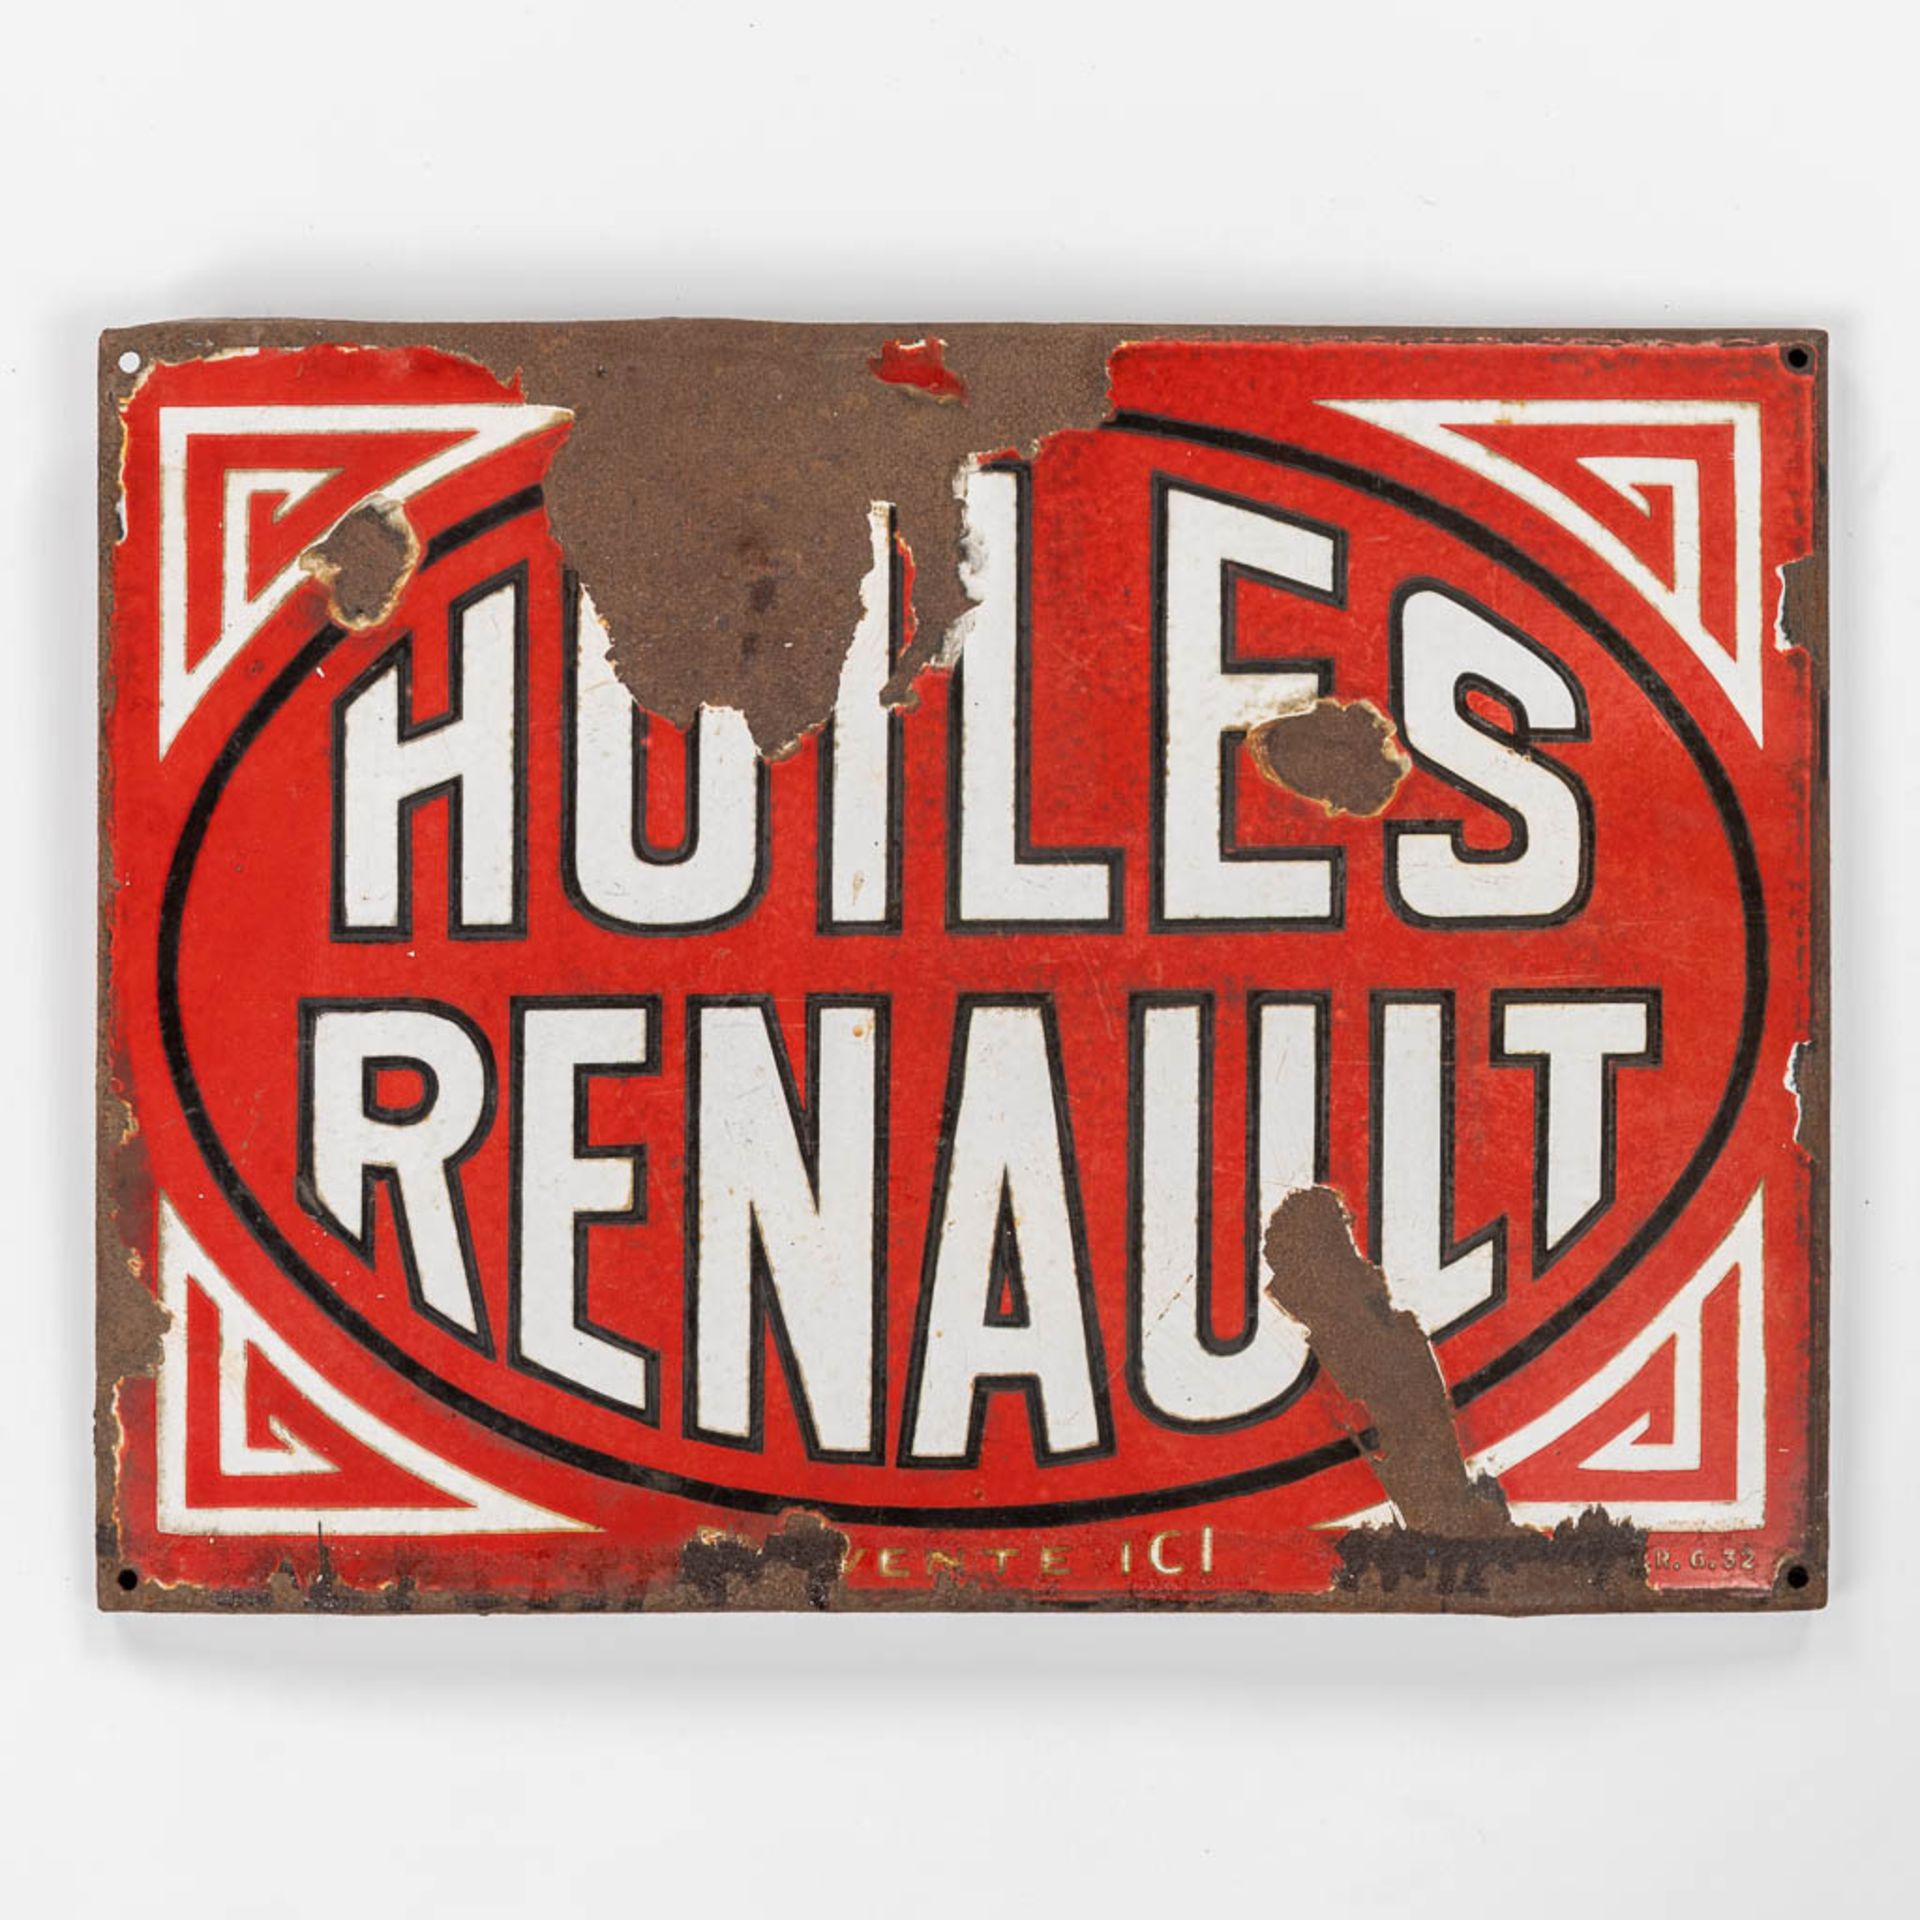 Huiles Renault En Vente Ici, an enamelled plate, 1932. (W: 55 x H: 40 cm)